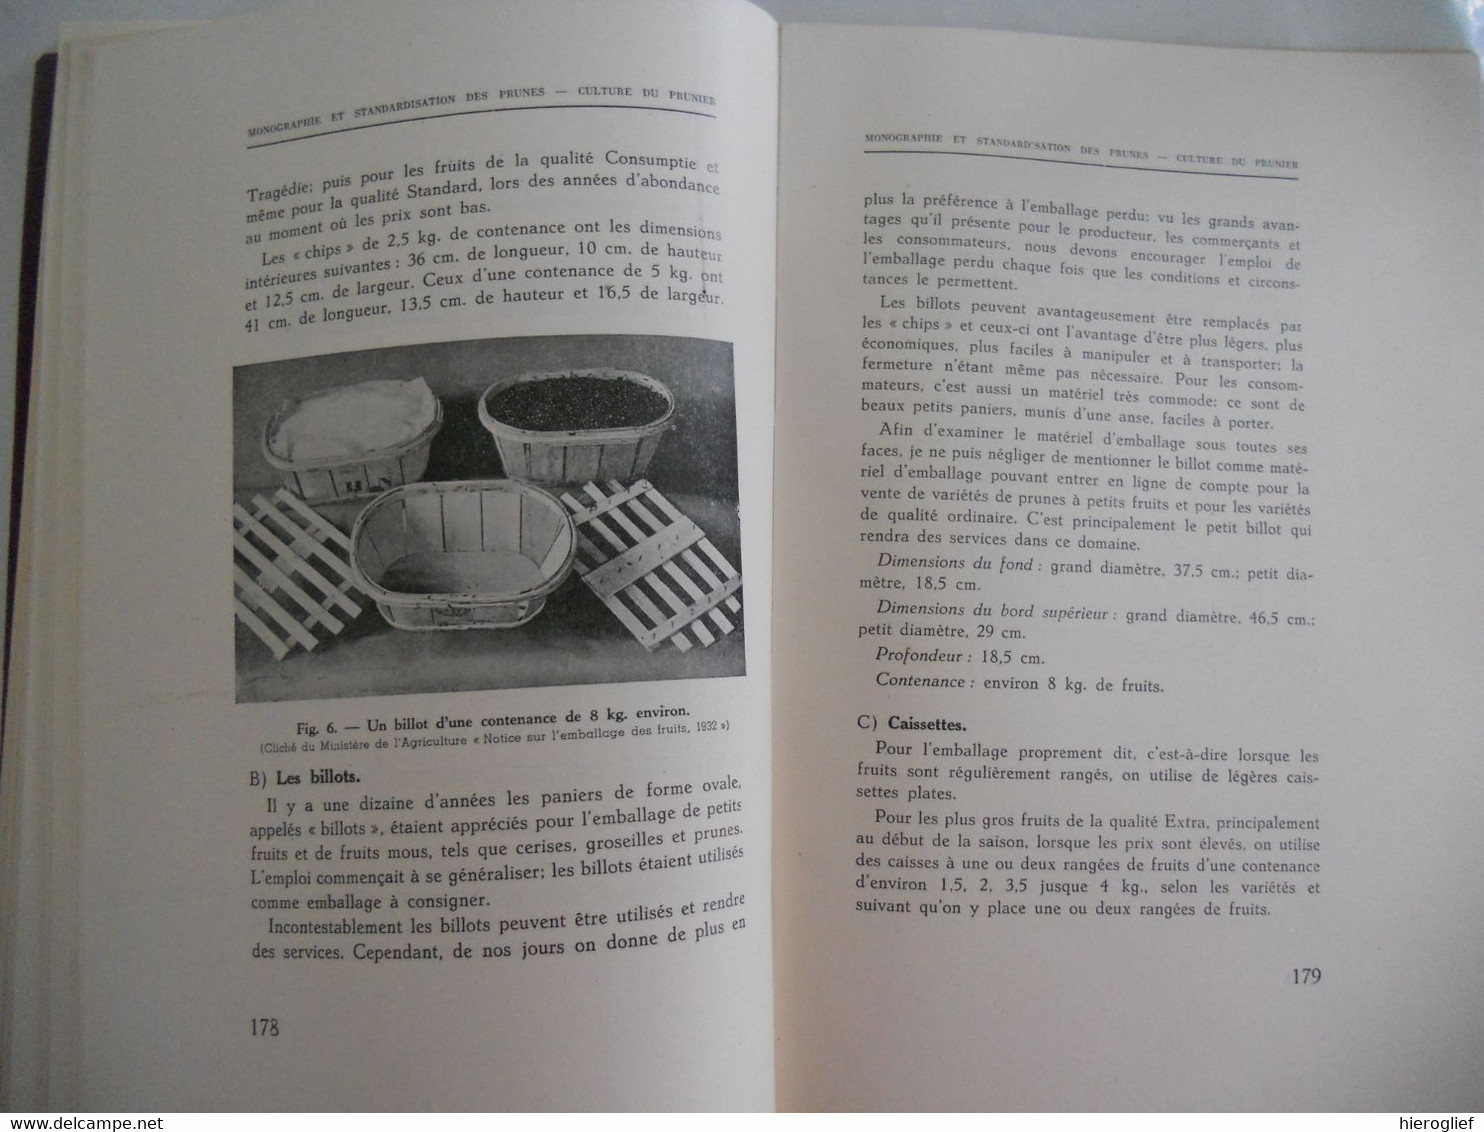 Monographie et Stardardisation des PRUNES - CULTURE de PRUNIER par Edm. Van Cauwenberghe 1942 Vilvoorde